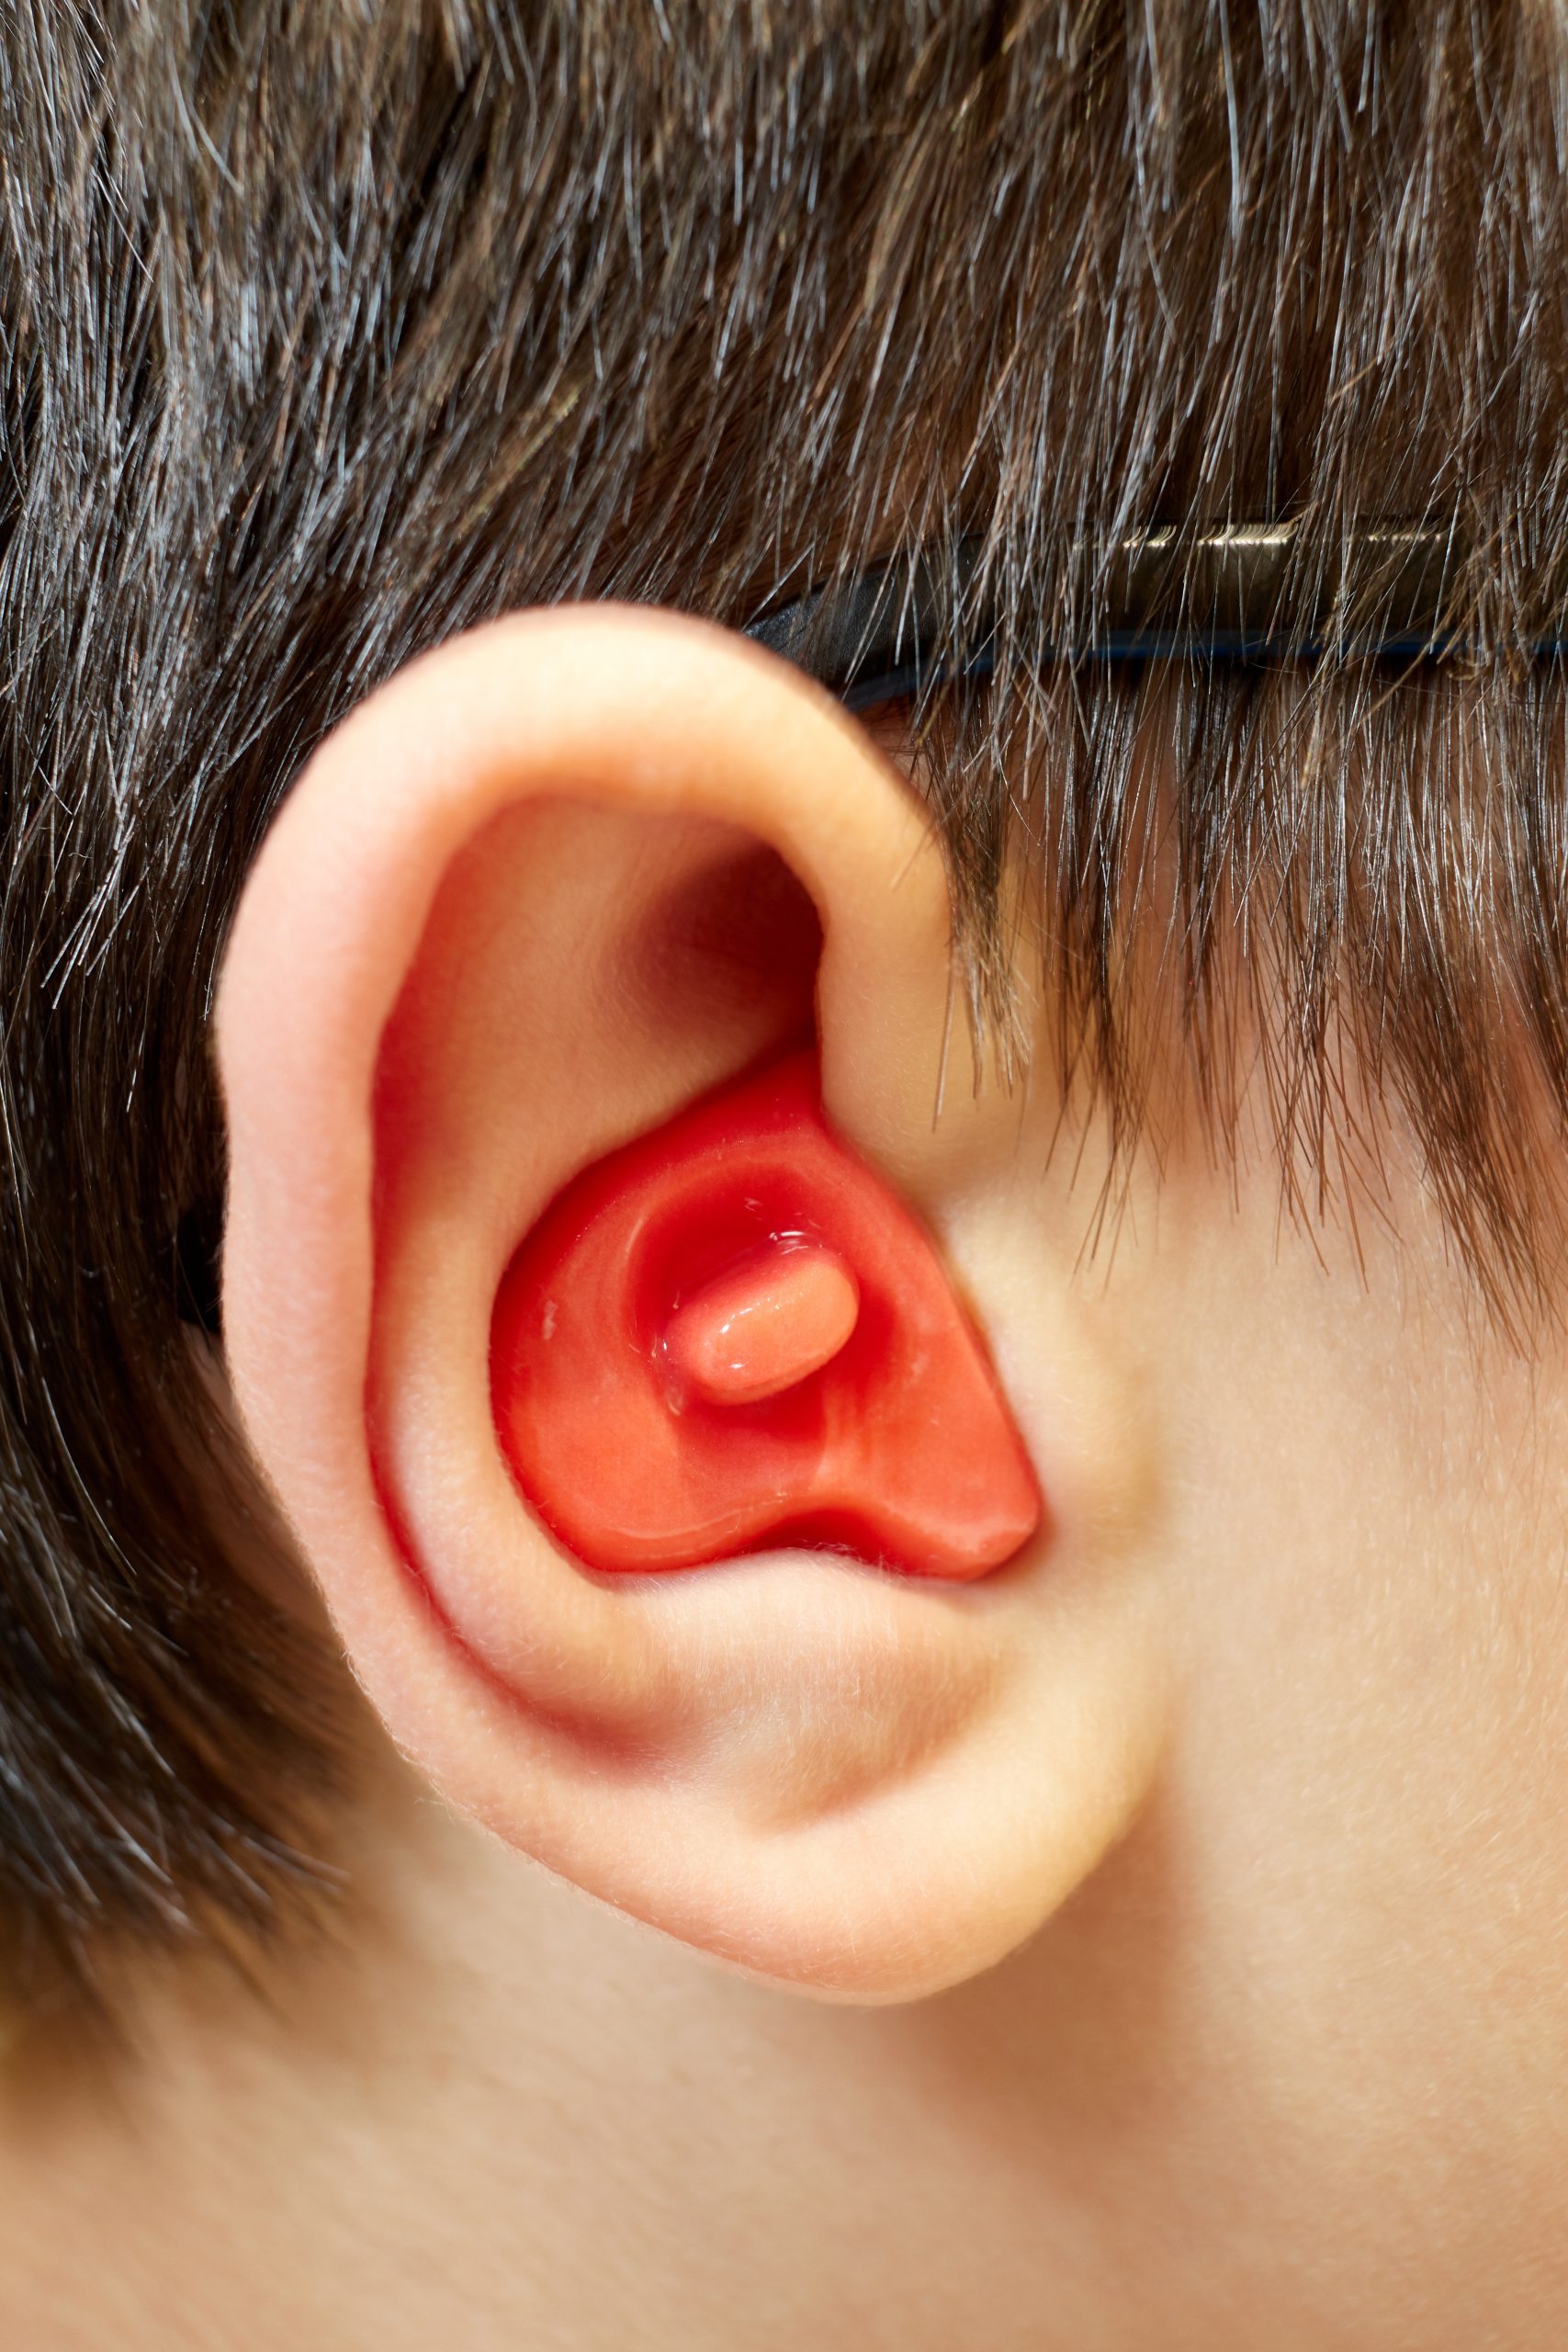 Can a hearing clinic make me custom ear molds?